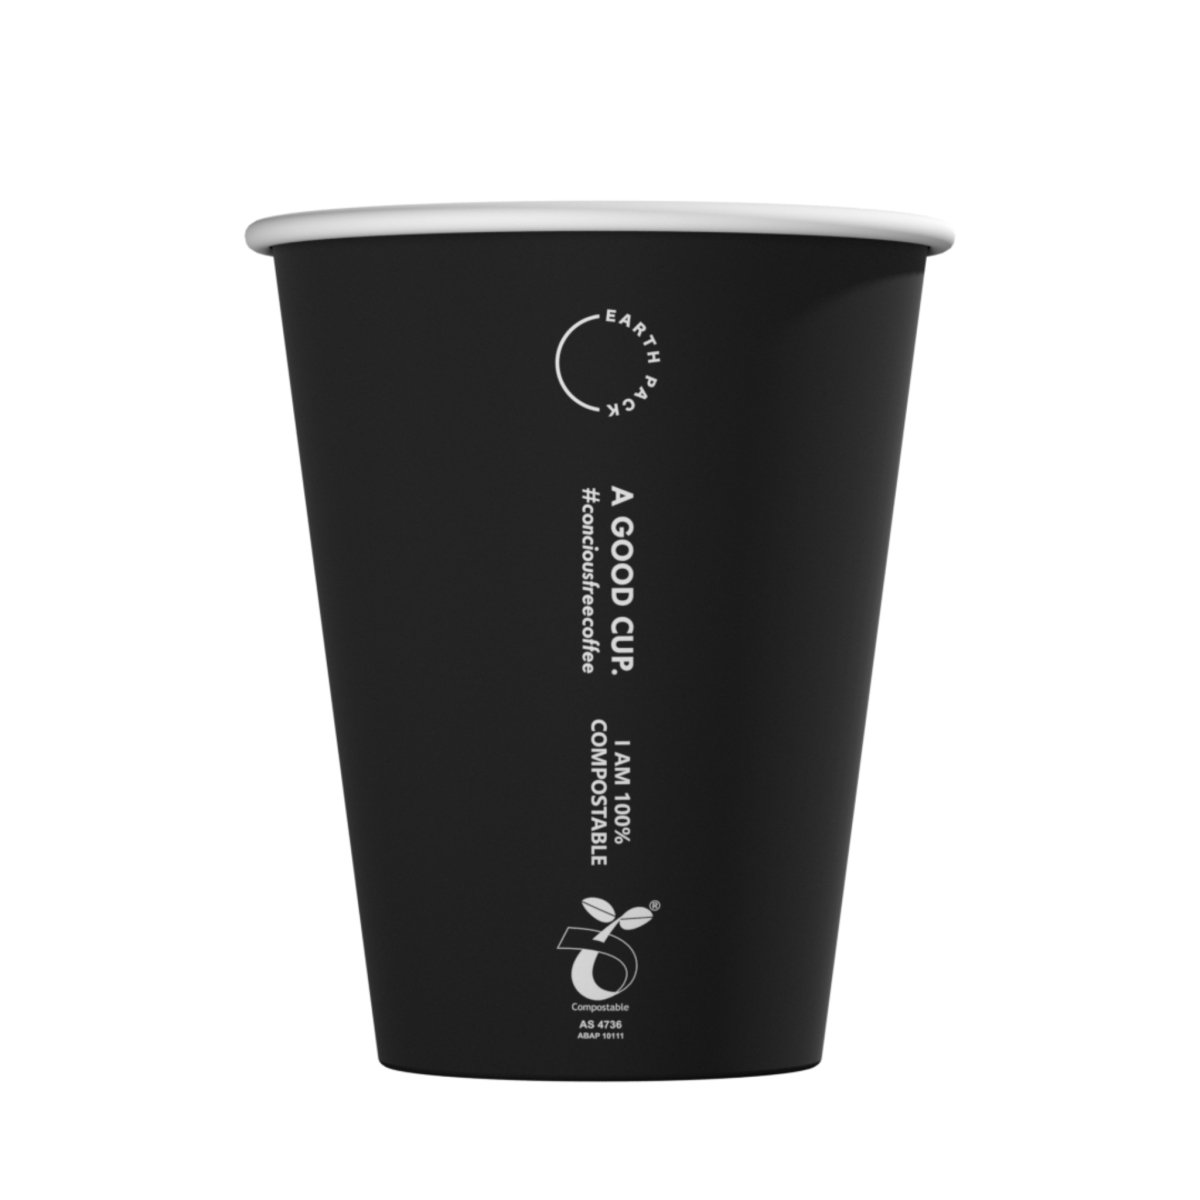 16oz Black Compostable Coffee Cup